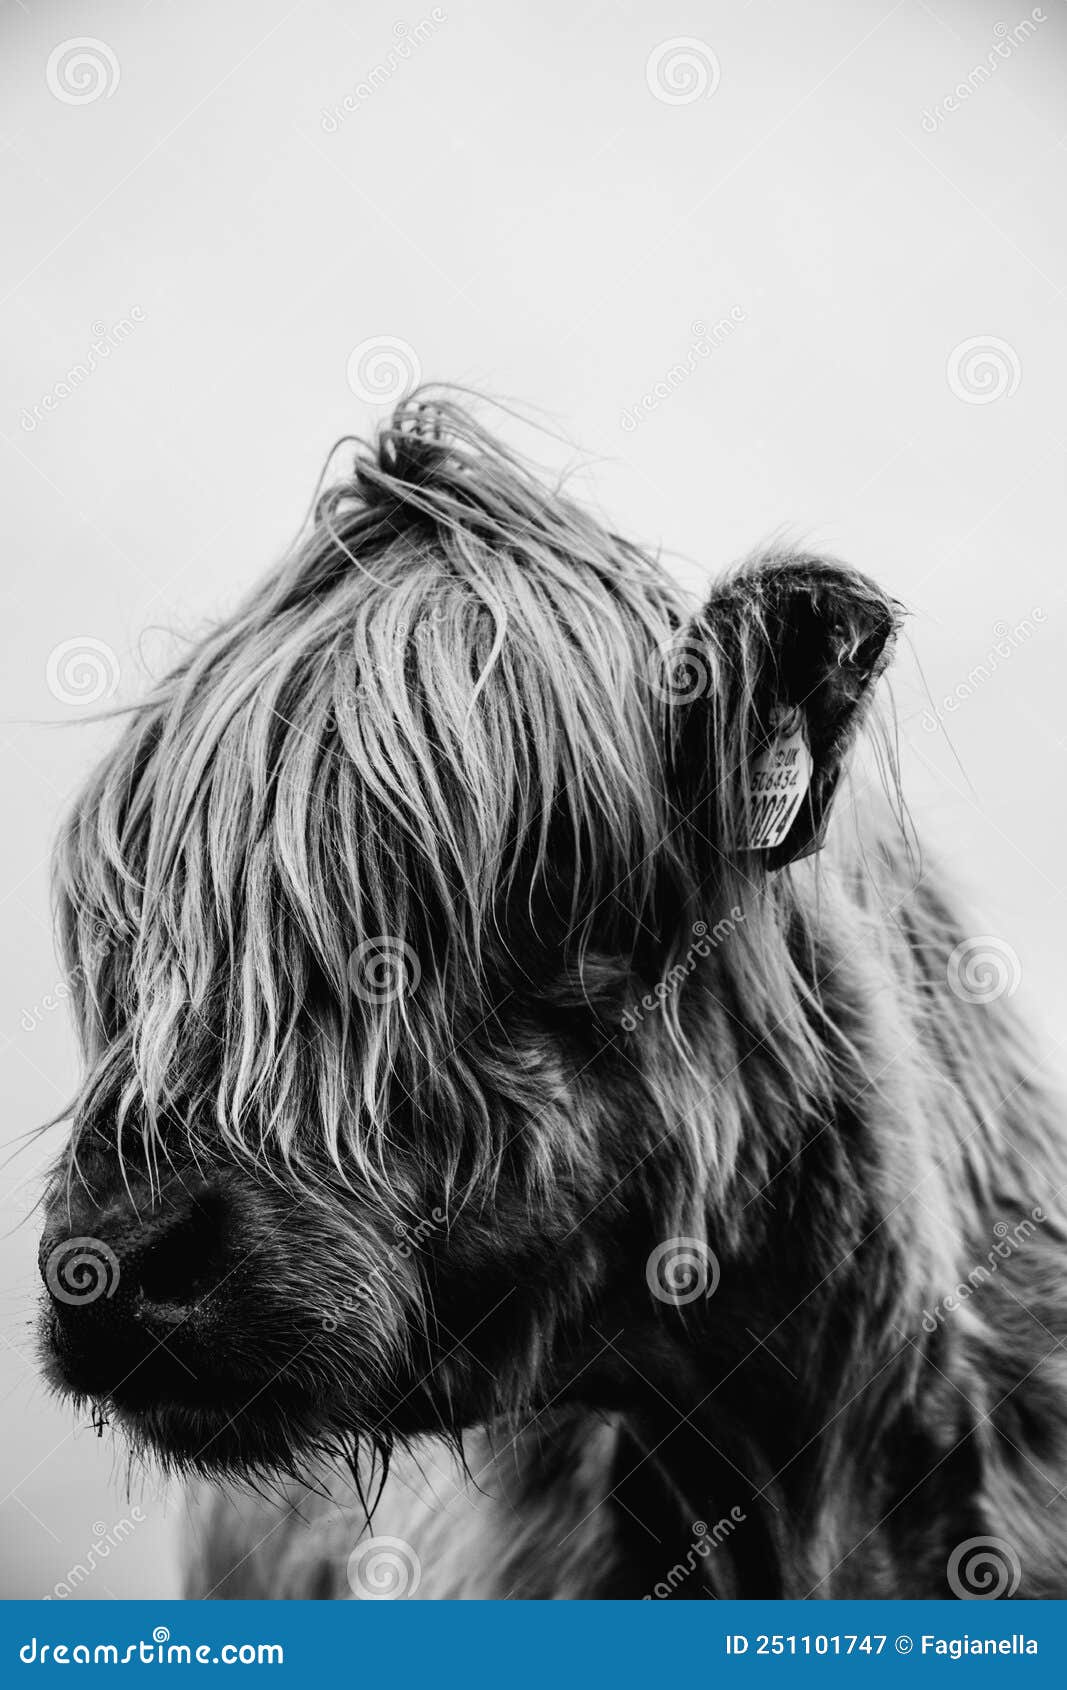 Highland cows portrait stock image. Image of beast, scotland - 251101747